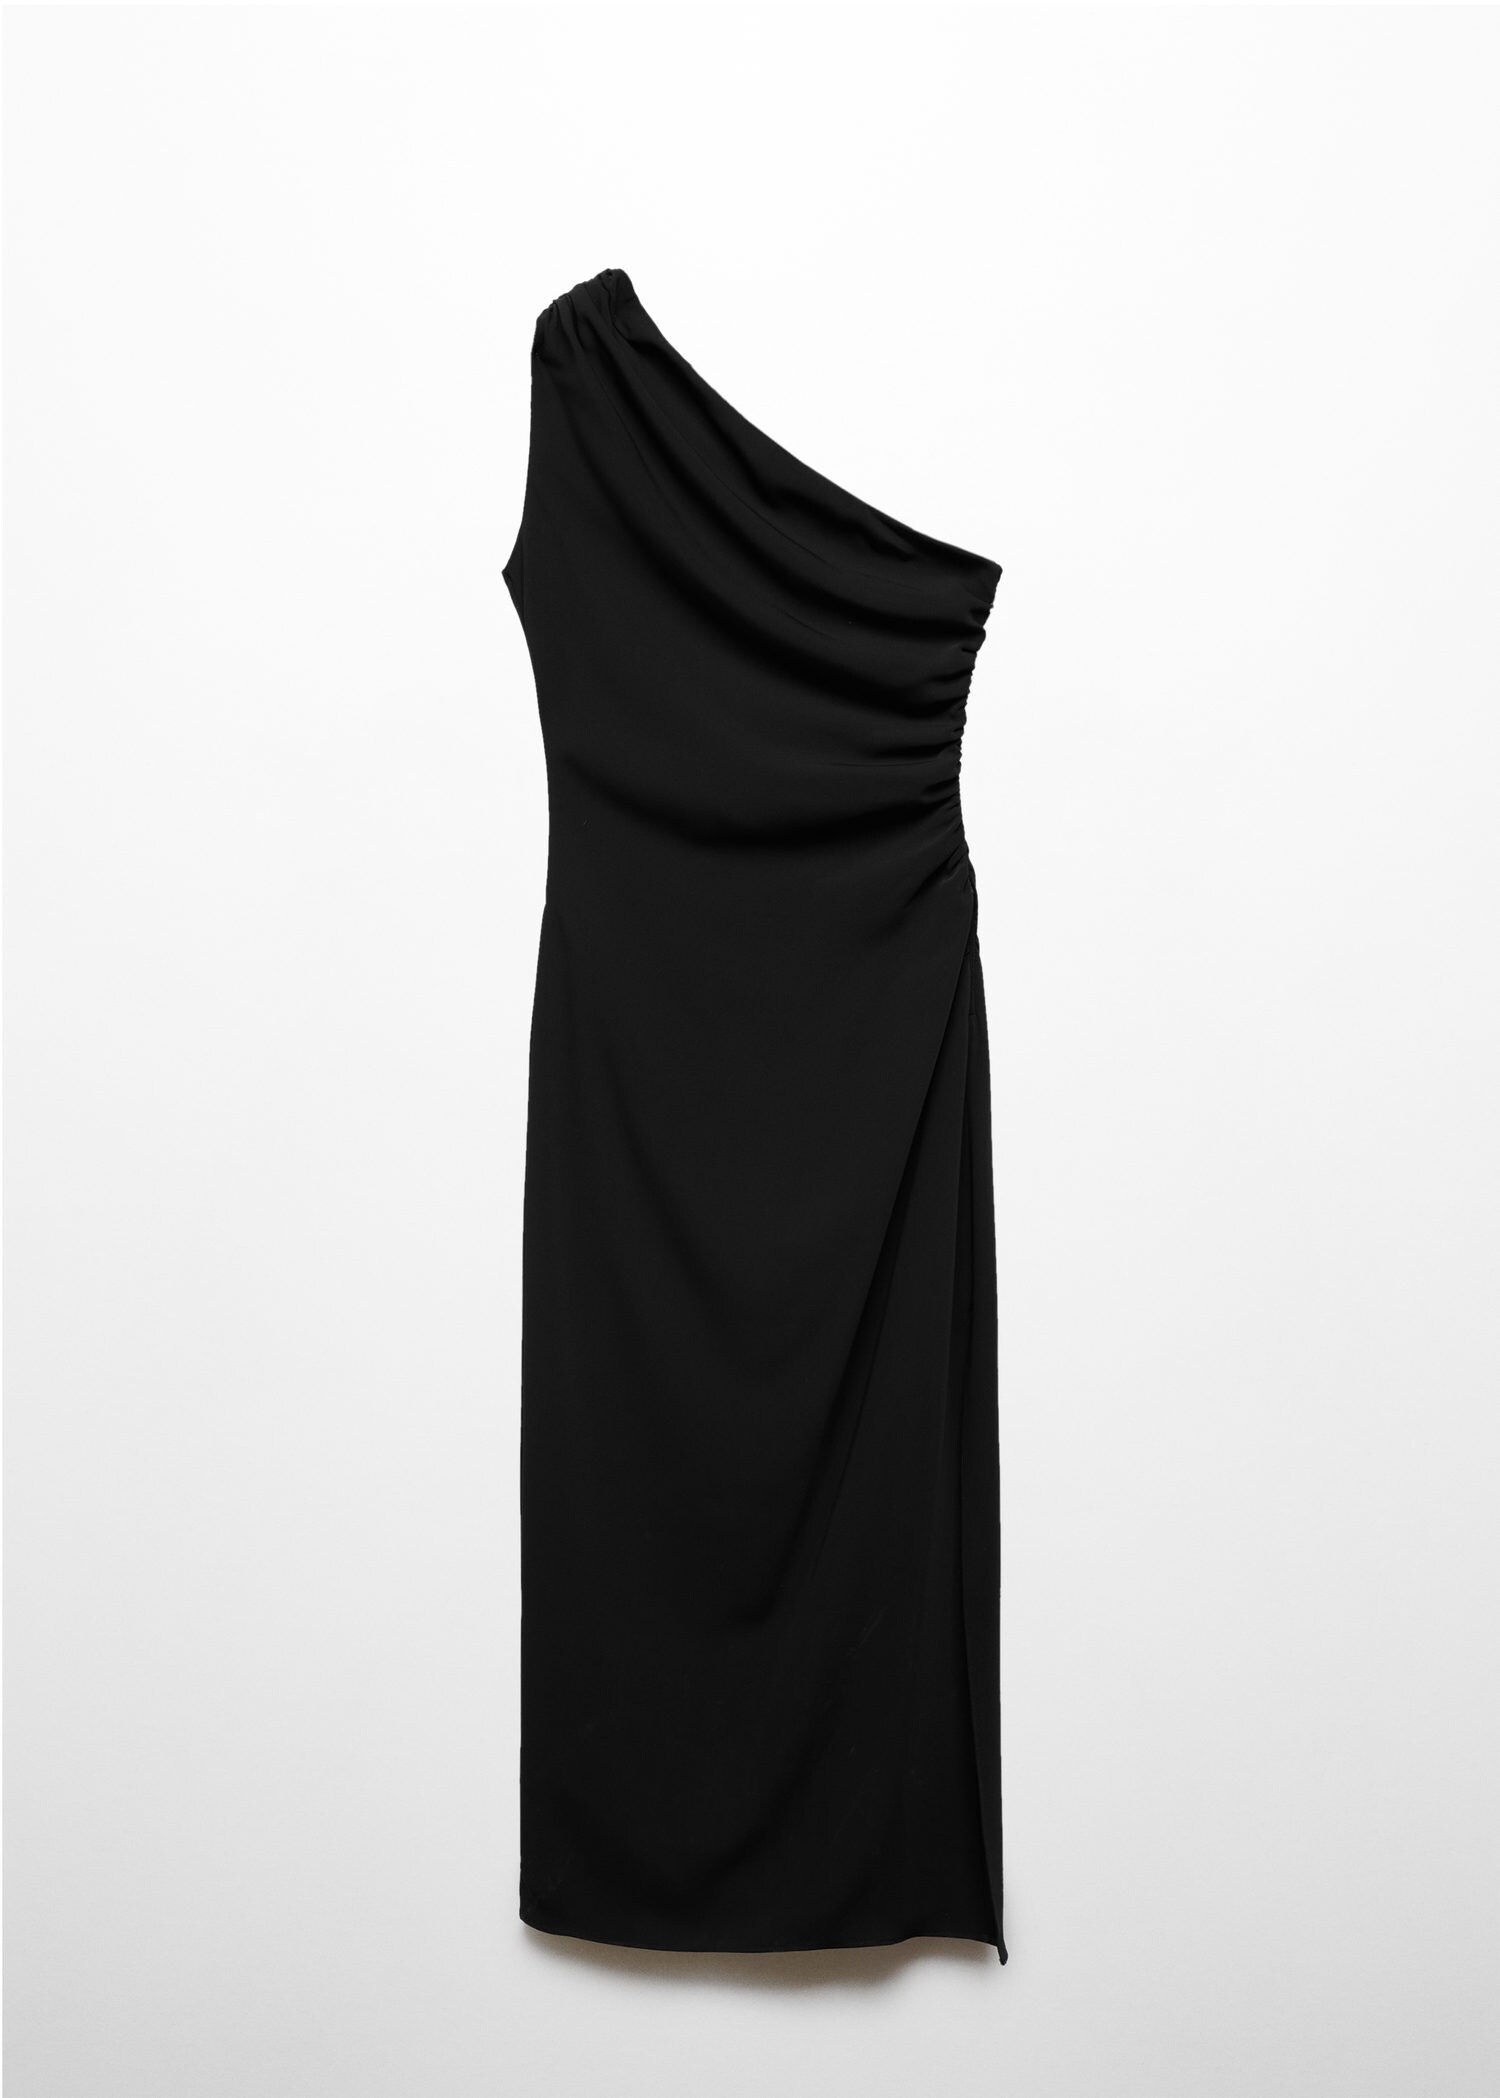 Asymmetrical dress with side slit | MANGO